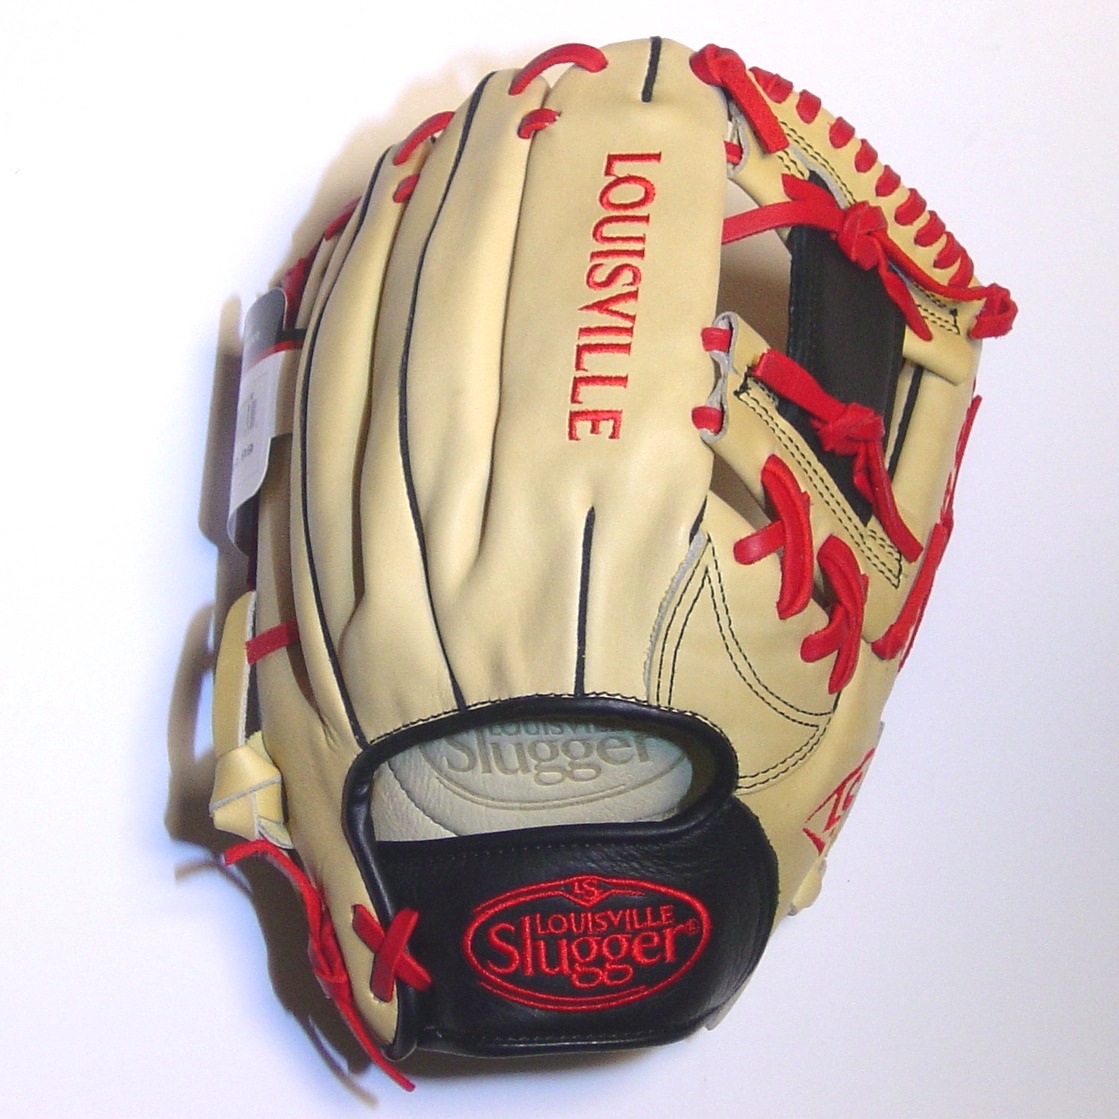 louisville-slugger-omaha-pro-11-5-baseball-glove-right-hand-throw FGOCCS61150-RightHandThrow Louisville 044277176532 The Louisville Slugger Omaha Pro series brings together premium shell leather